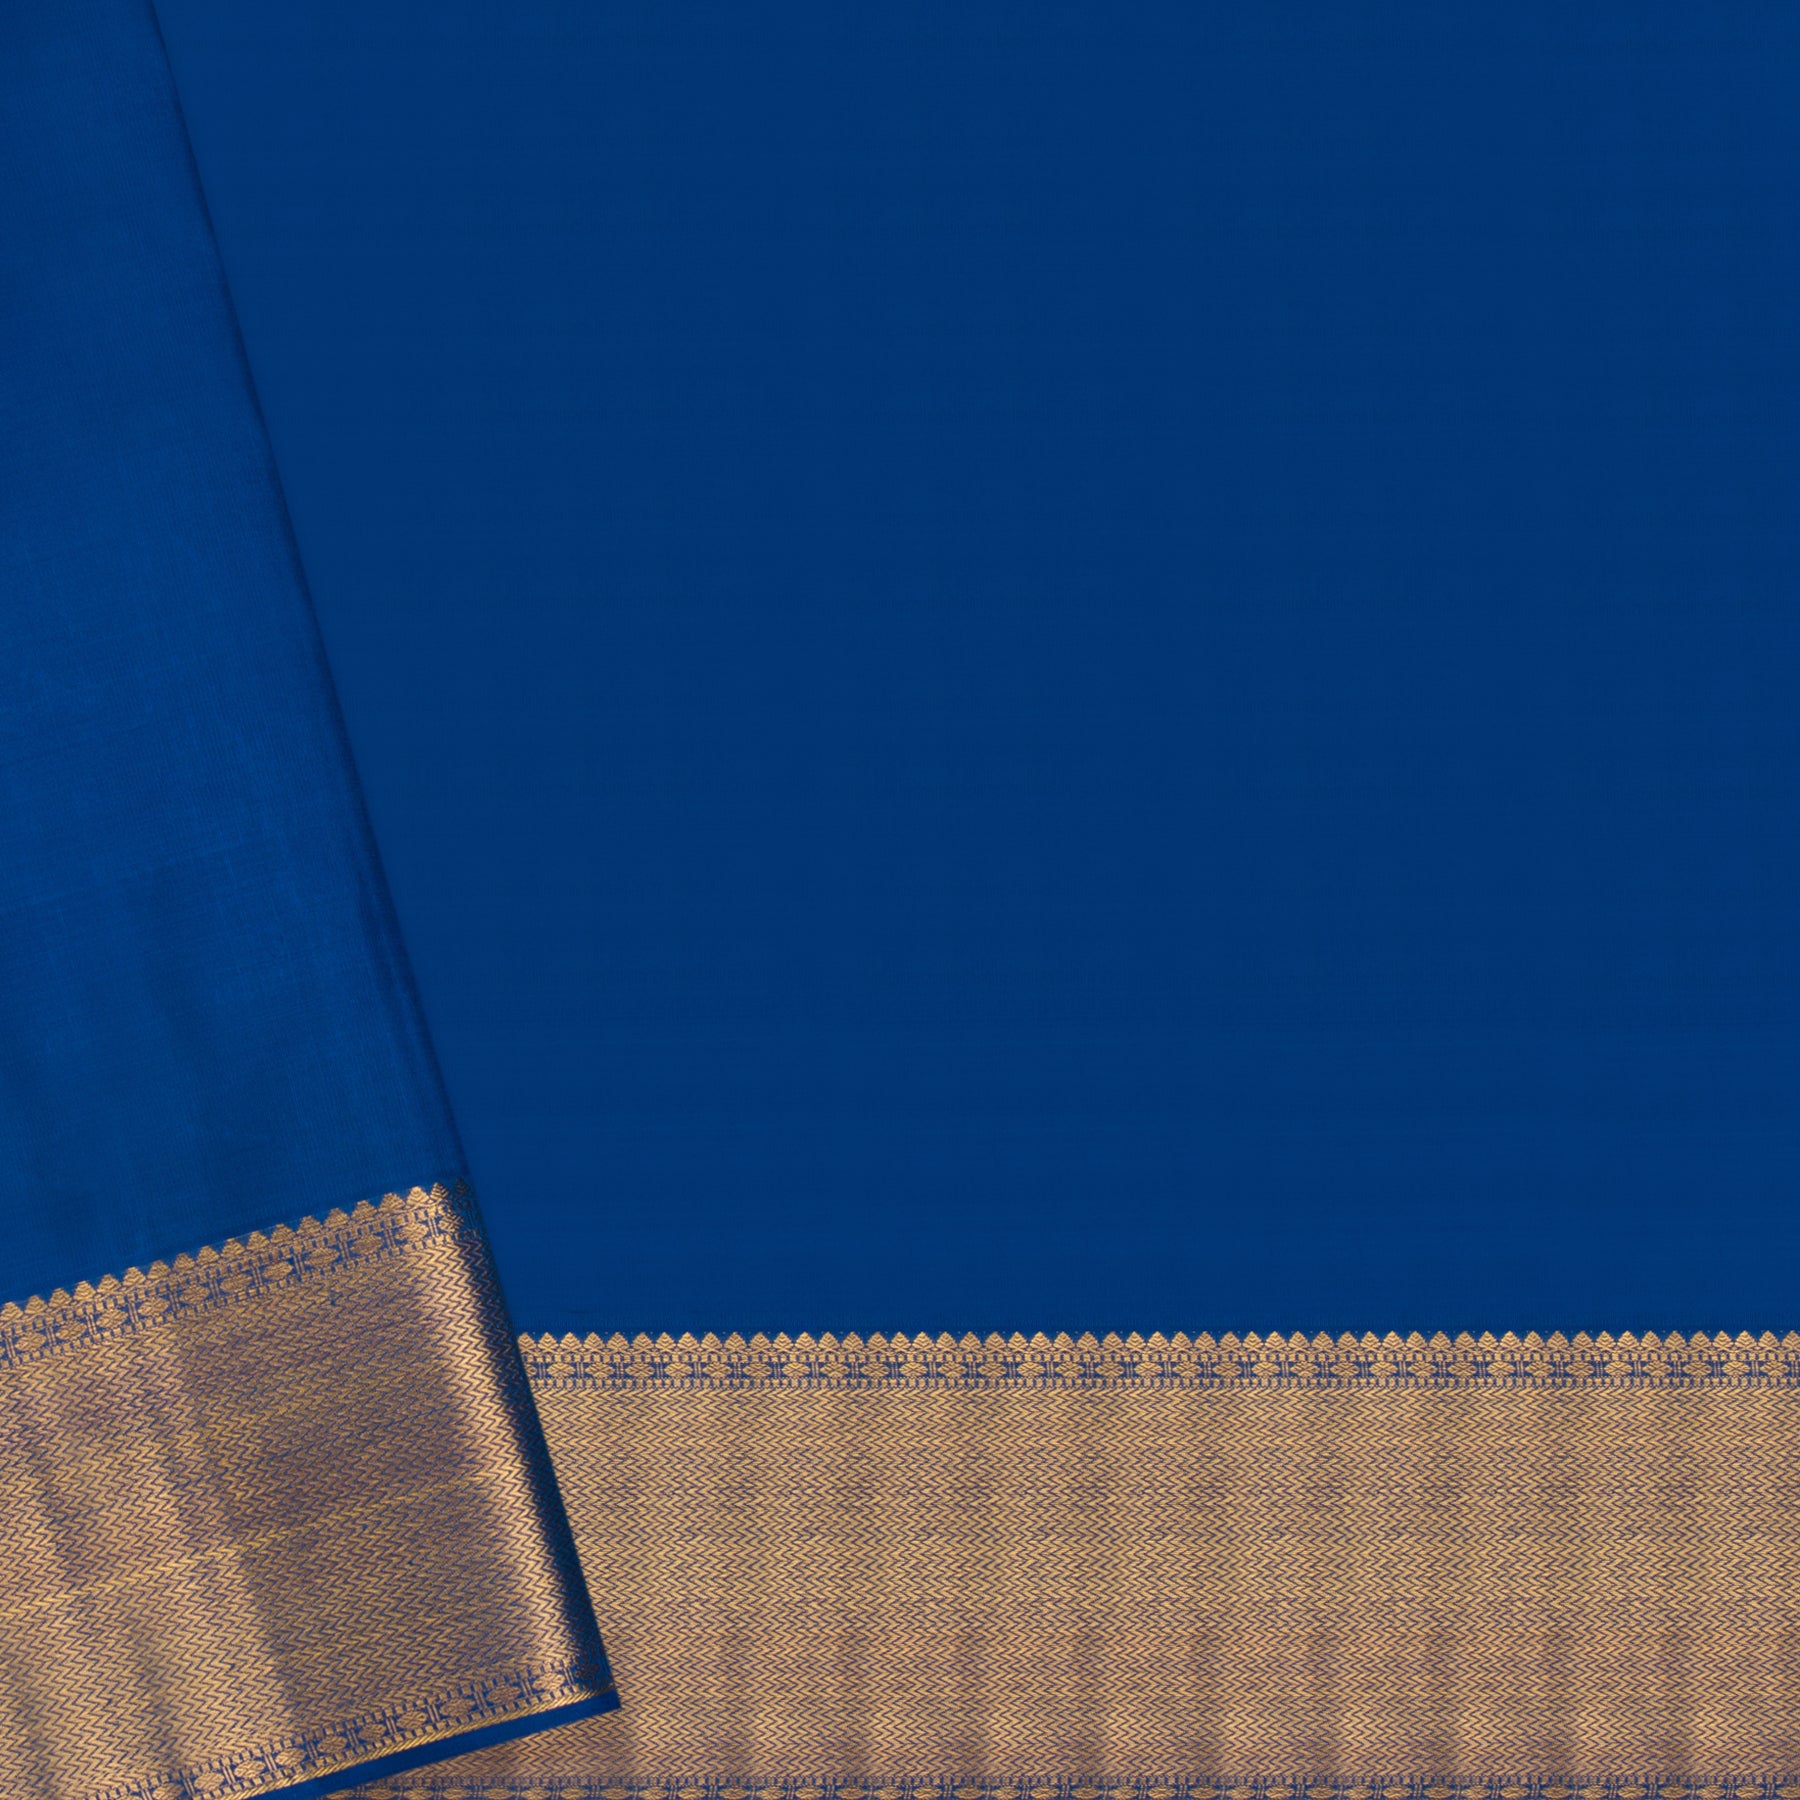 Kanakavalli Kanjivaram Silk Sari 23-611-HS001-04536 - Blouse View